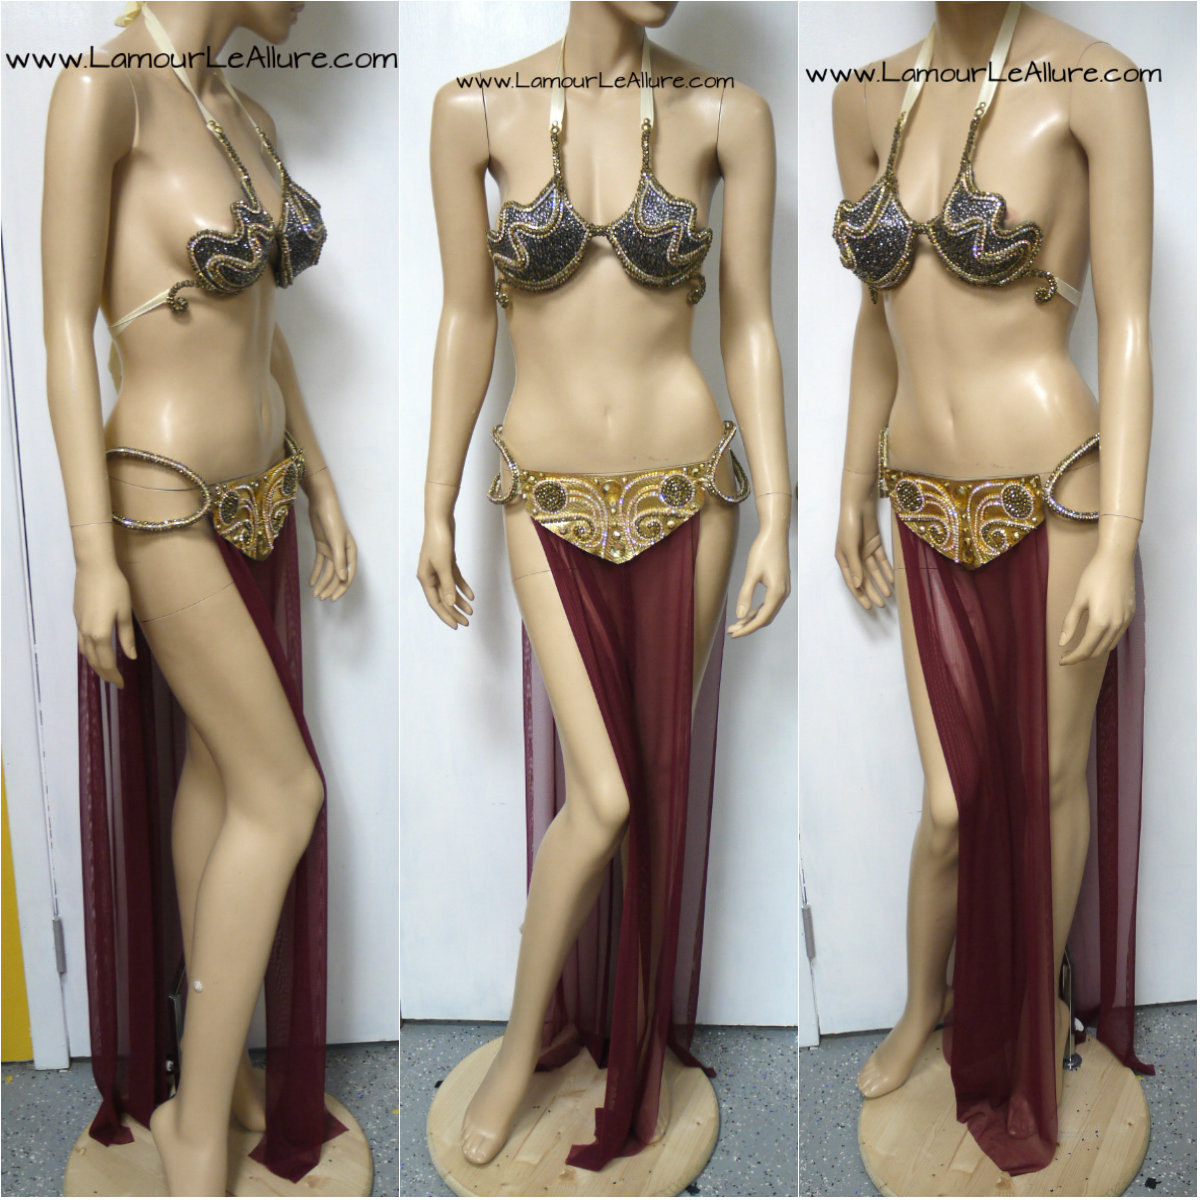 Princess Leia Slave Diamond Samba Rave Bra Gypsy Halloween Costume Cage Cosplay